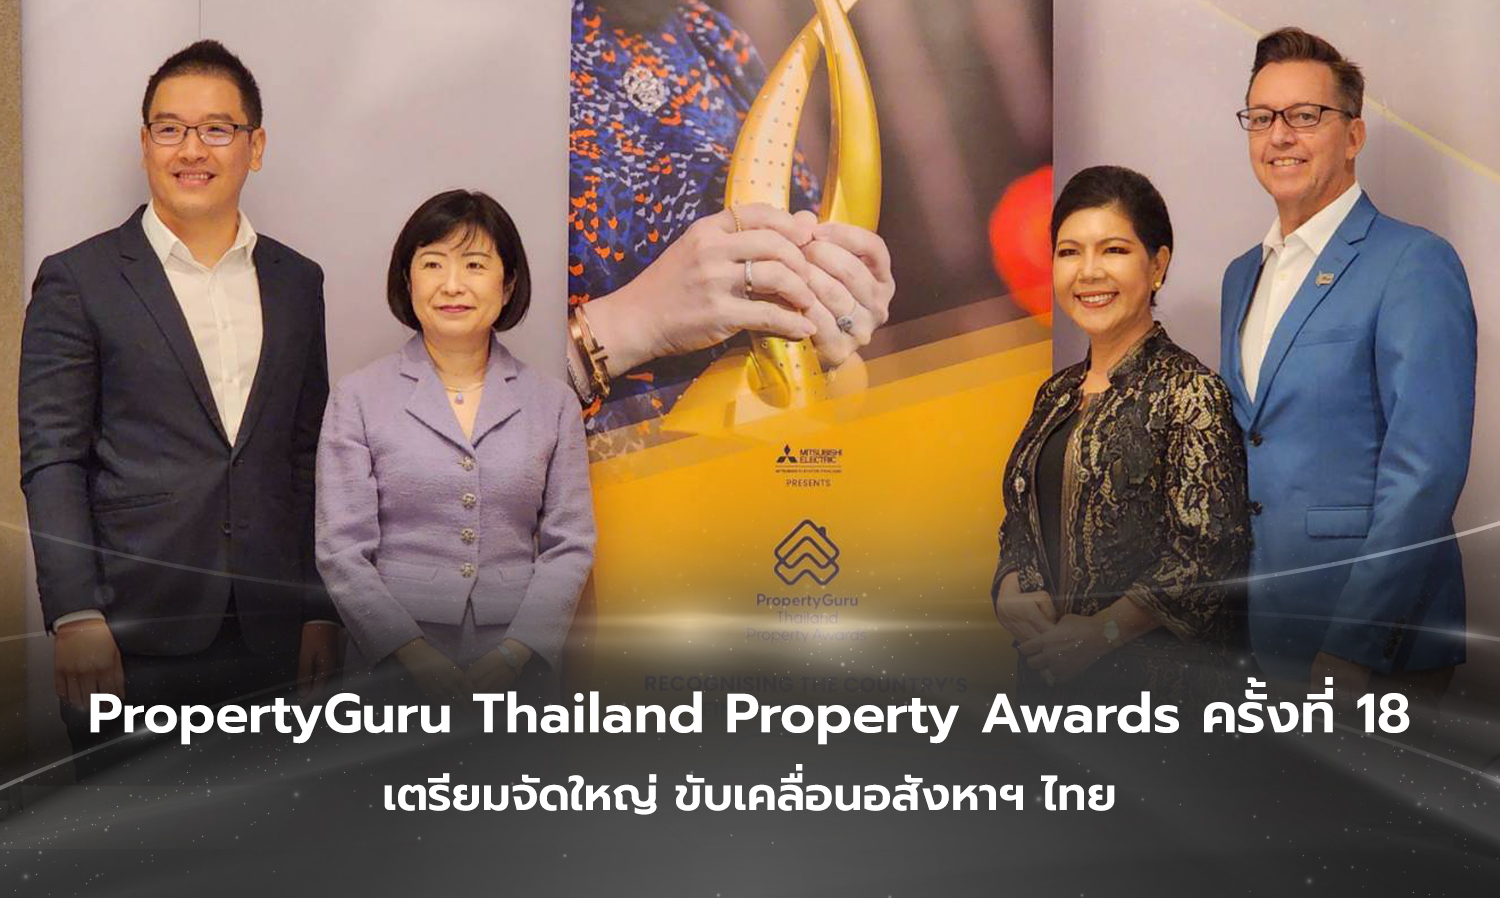 PropertyGuru Thailand Property Awards ครั้งที่ 18 เตรียมจัดใหญ่ ขับเคลื่อนอสังหาฯ ไทย